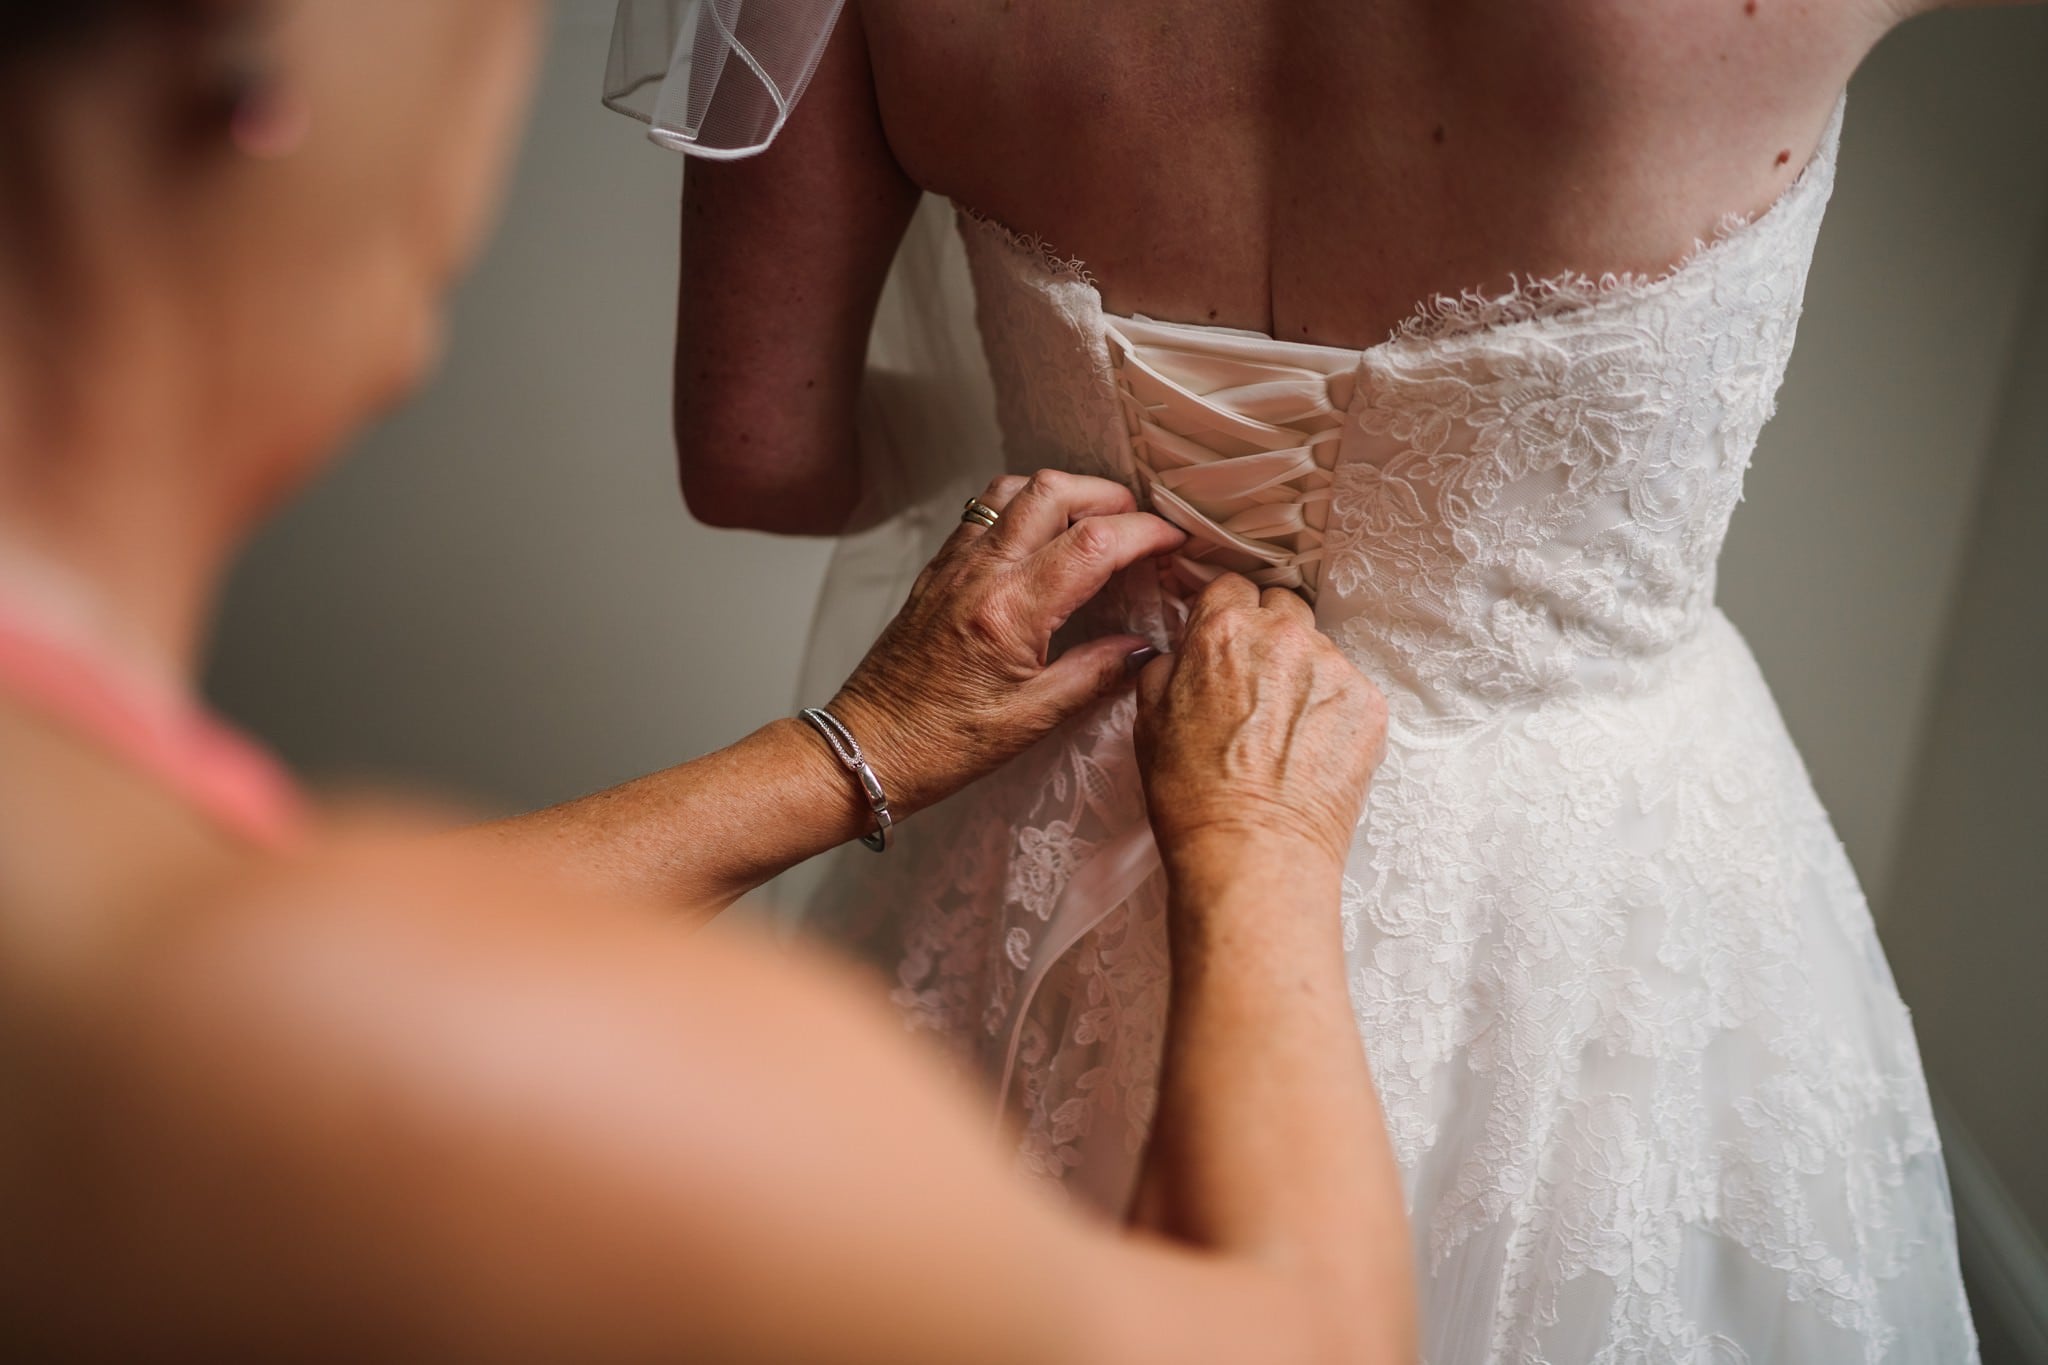 Lace up wedding corset dress at Three Choirs Vineyard wedding